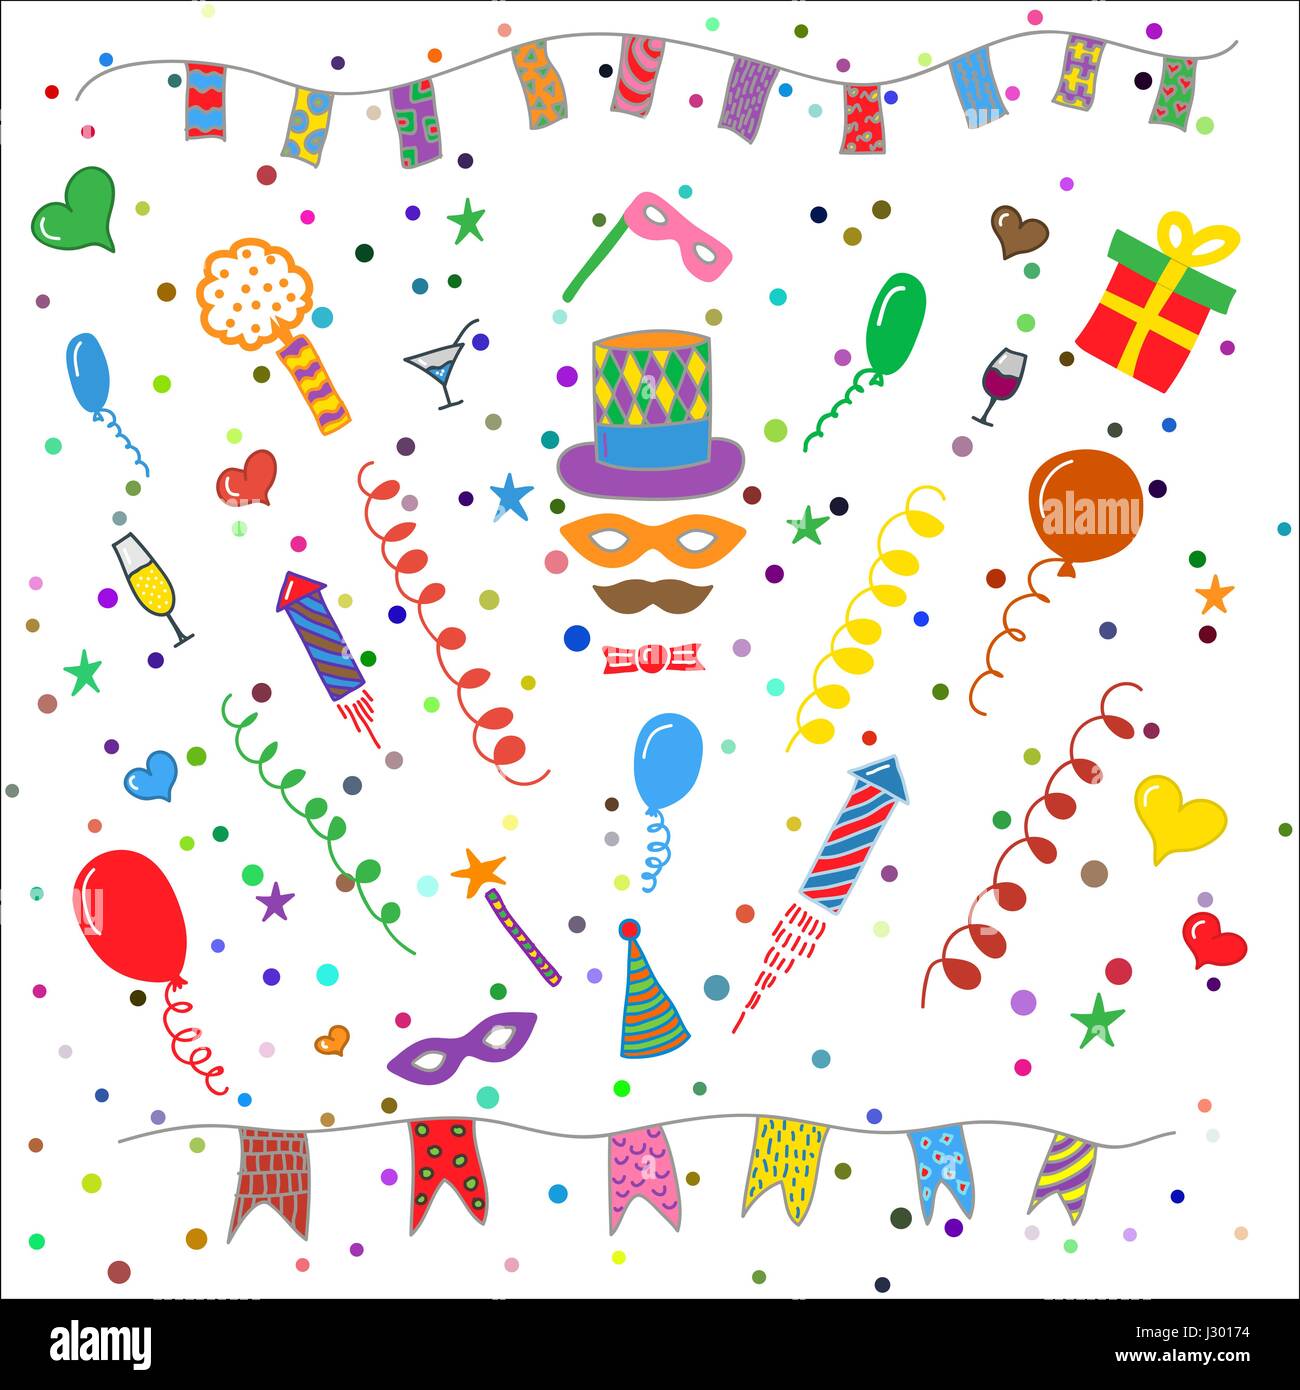 Geburtstag Party Symbole Sammlung Stock Vektor